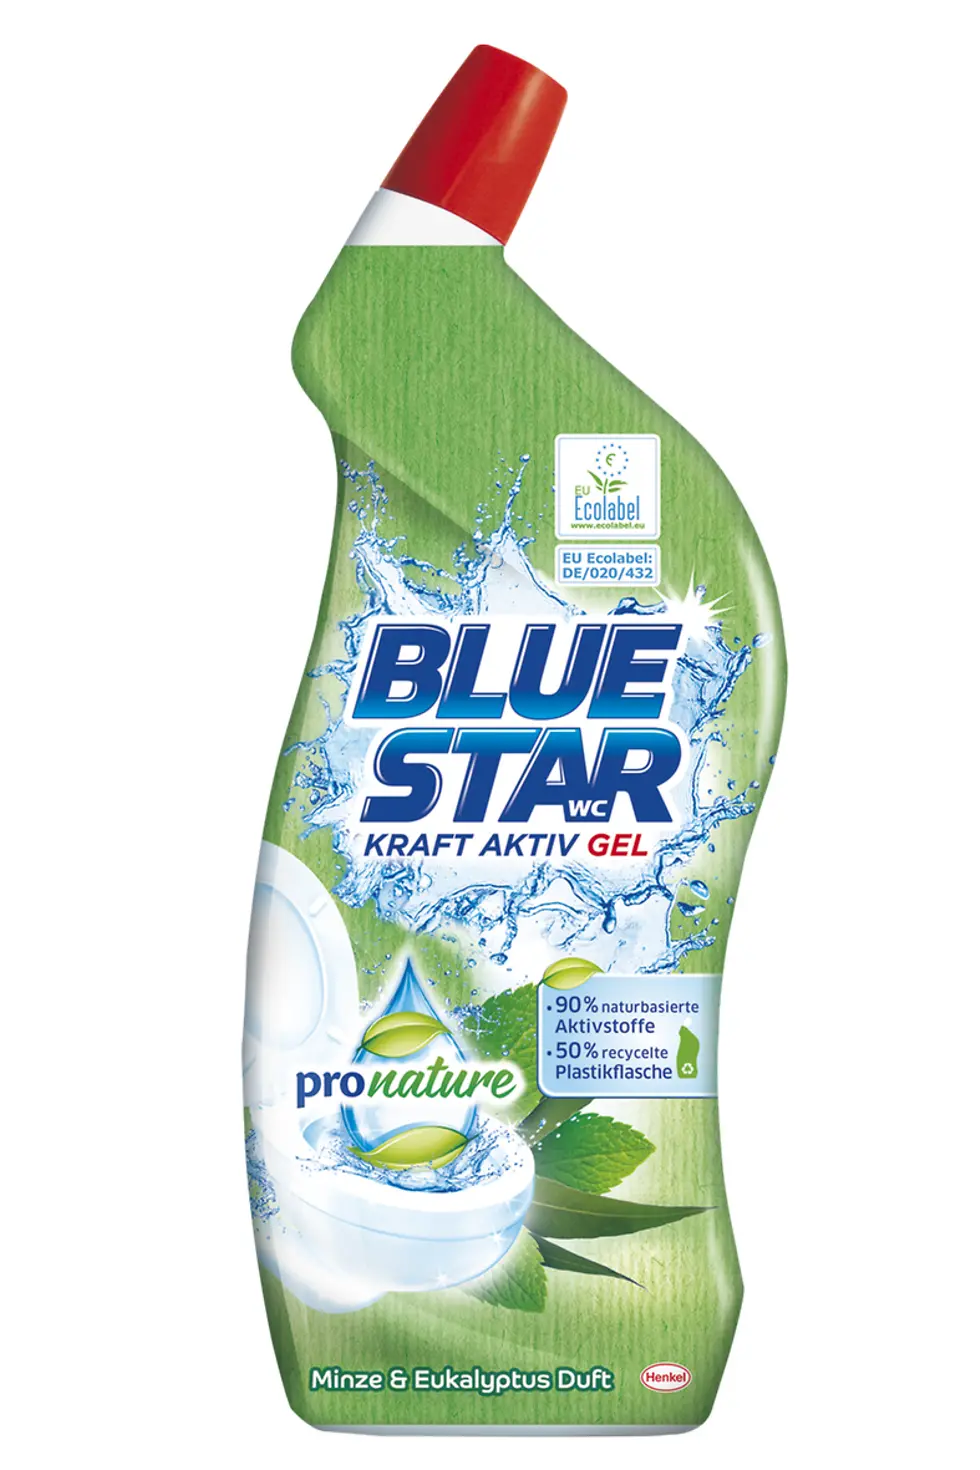 Blue Star Kraft-Aktiv ProNature